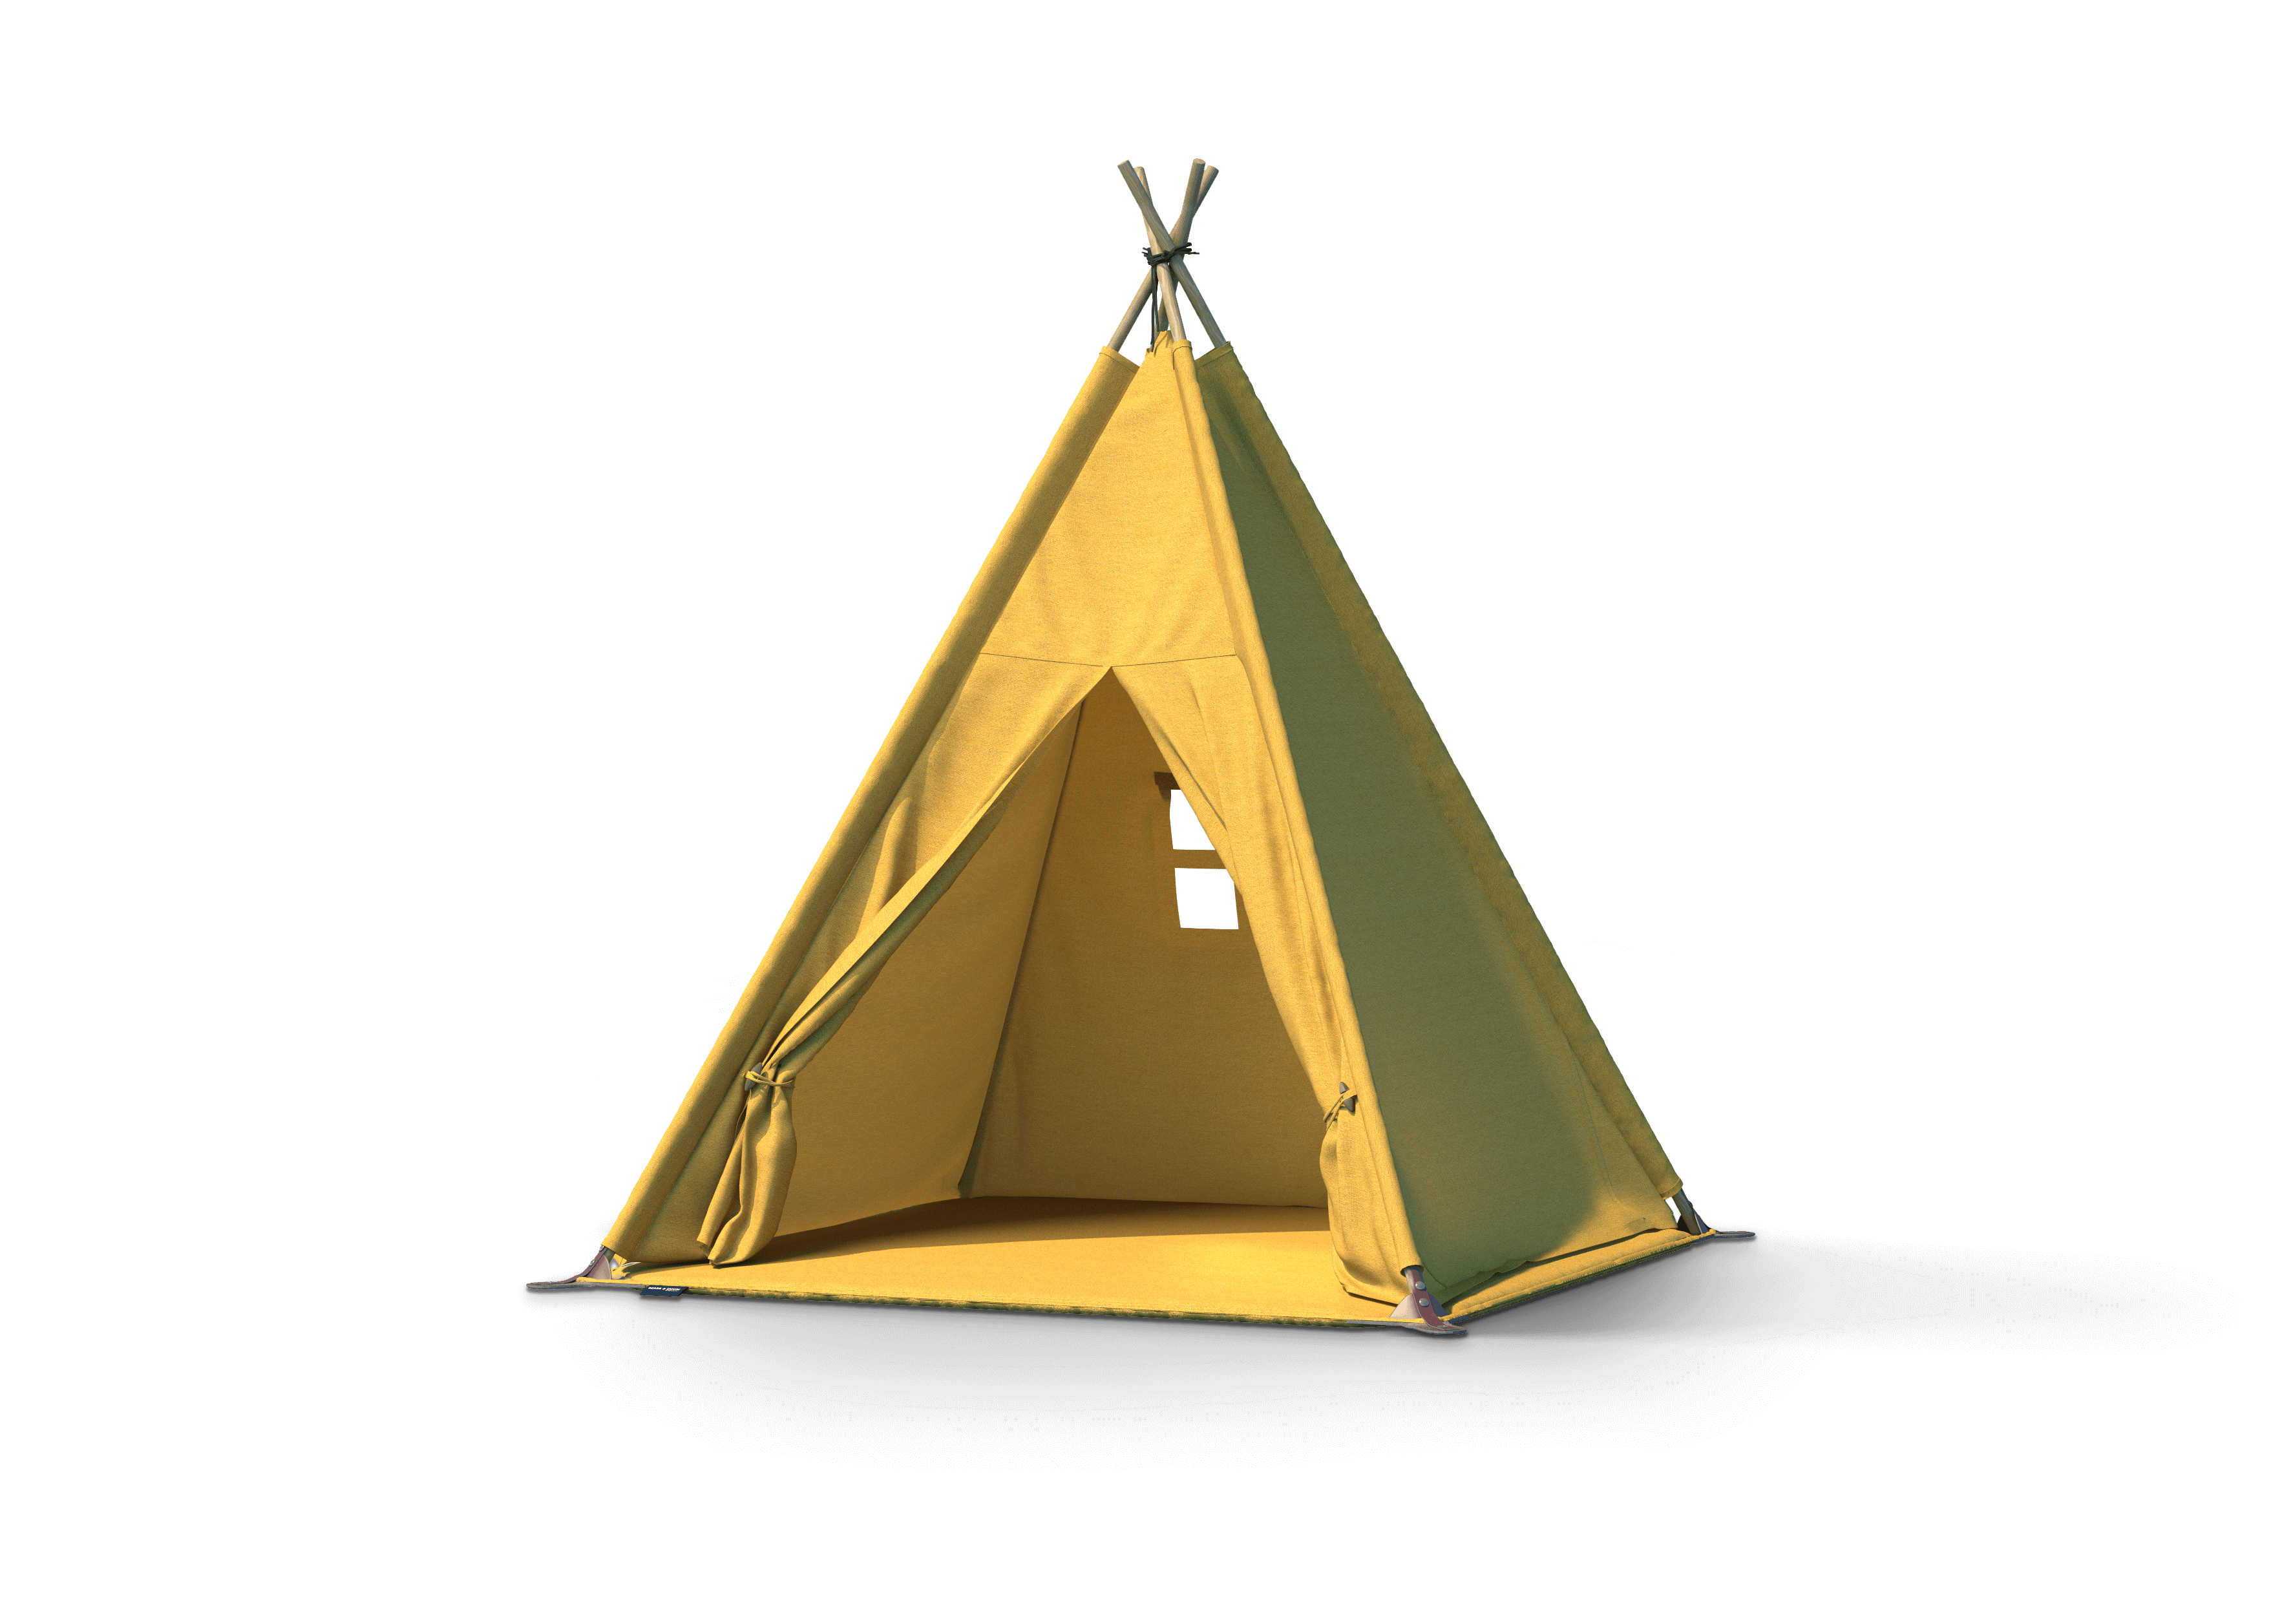 Beyond tents kids tent tipi tent autentic tents tent for kids